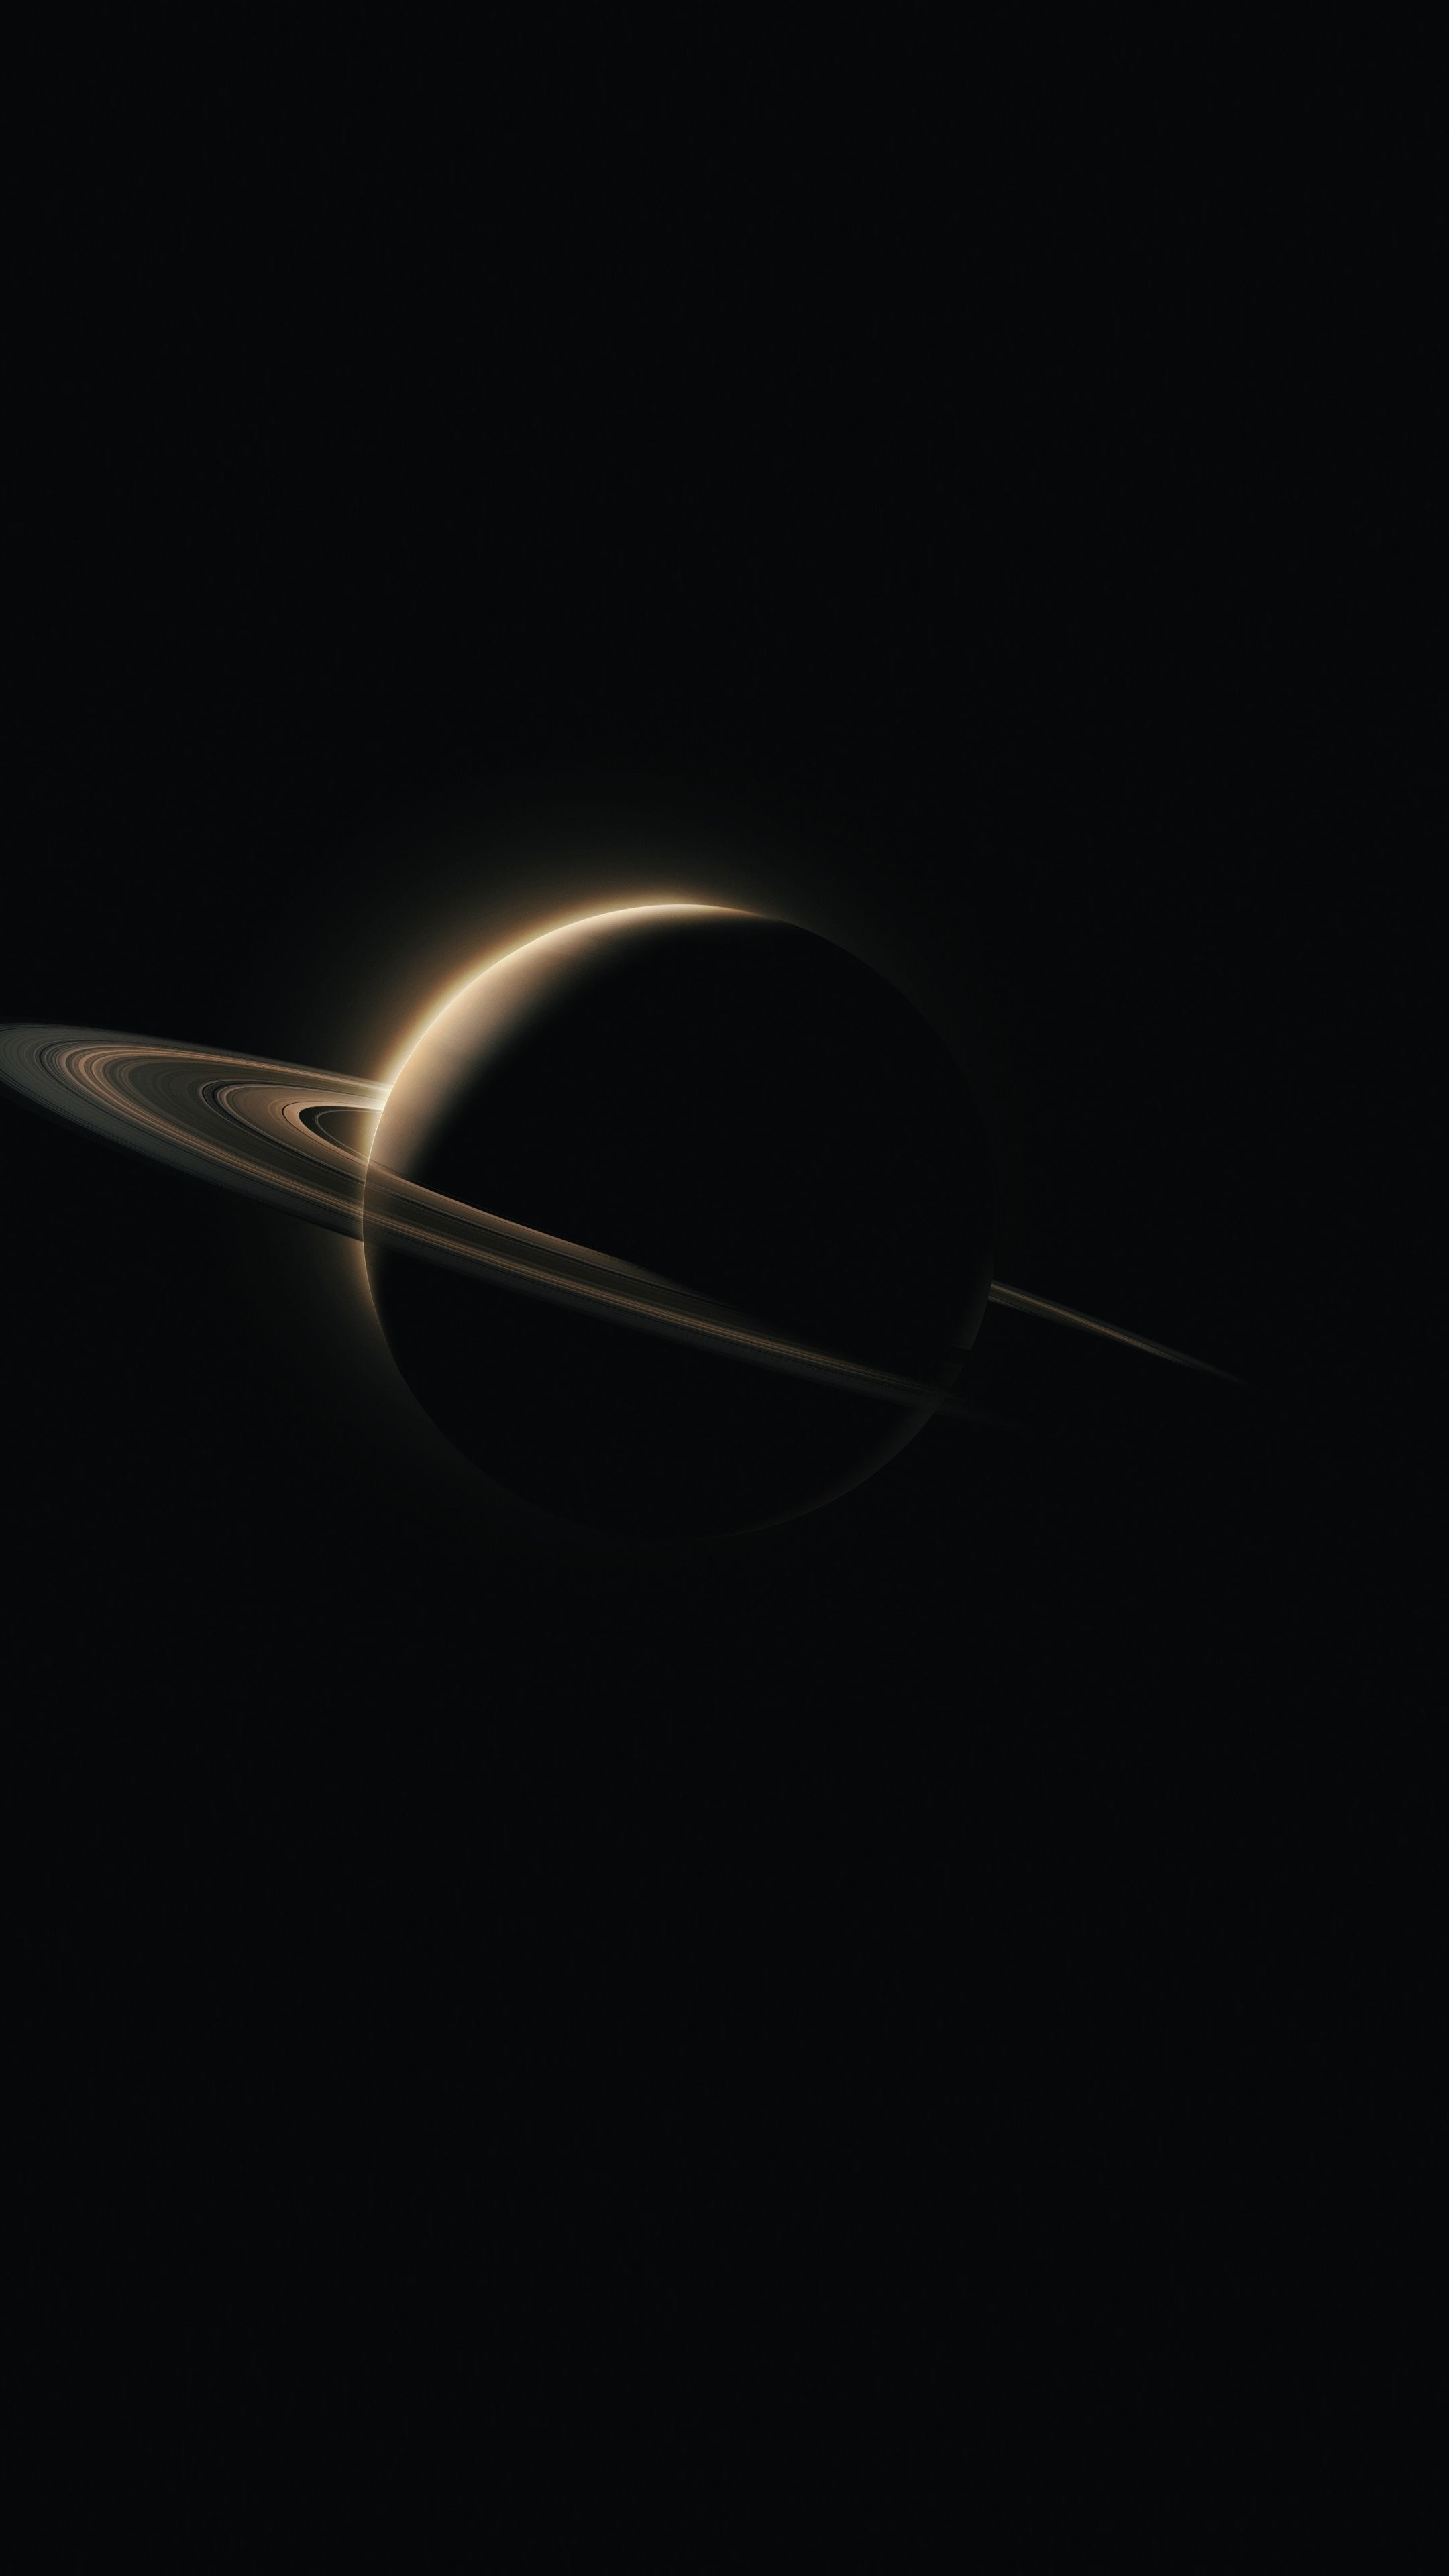 2160x3840 Saturn, planet, dark wallpaper | Space phone wallpaper, Planets, Wallpaper space